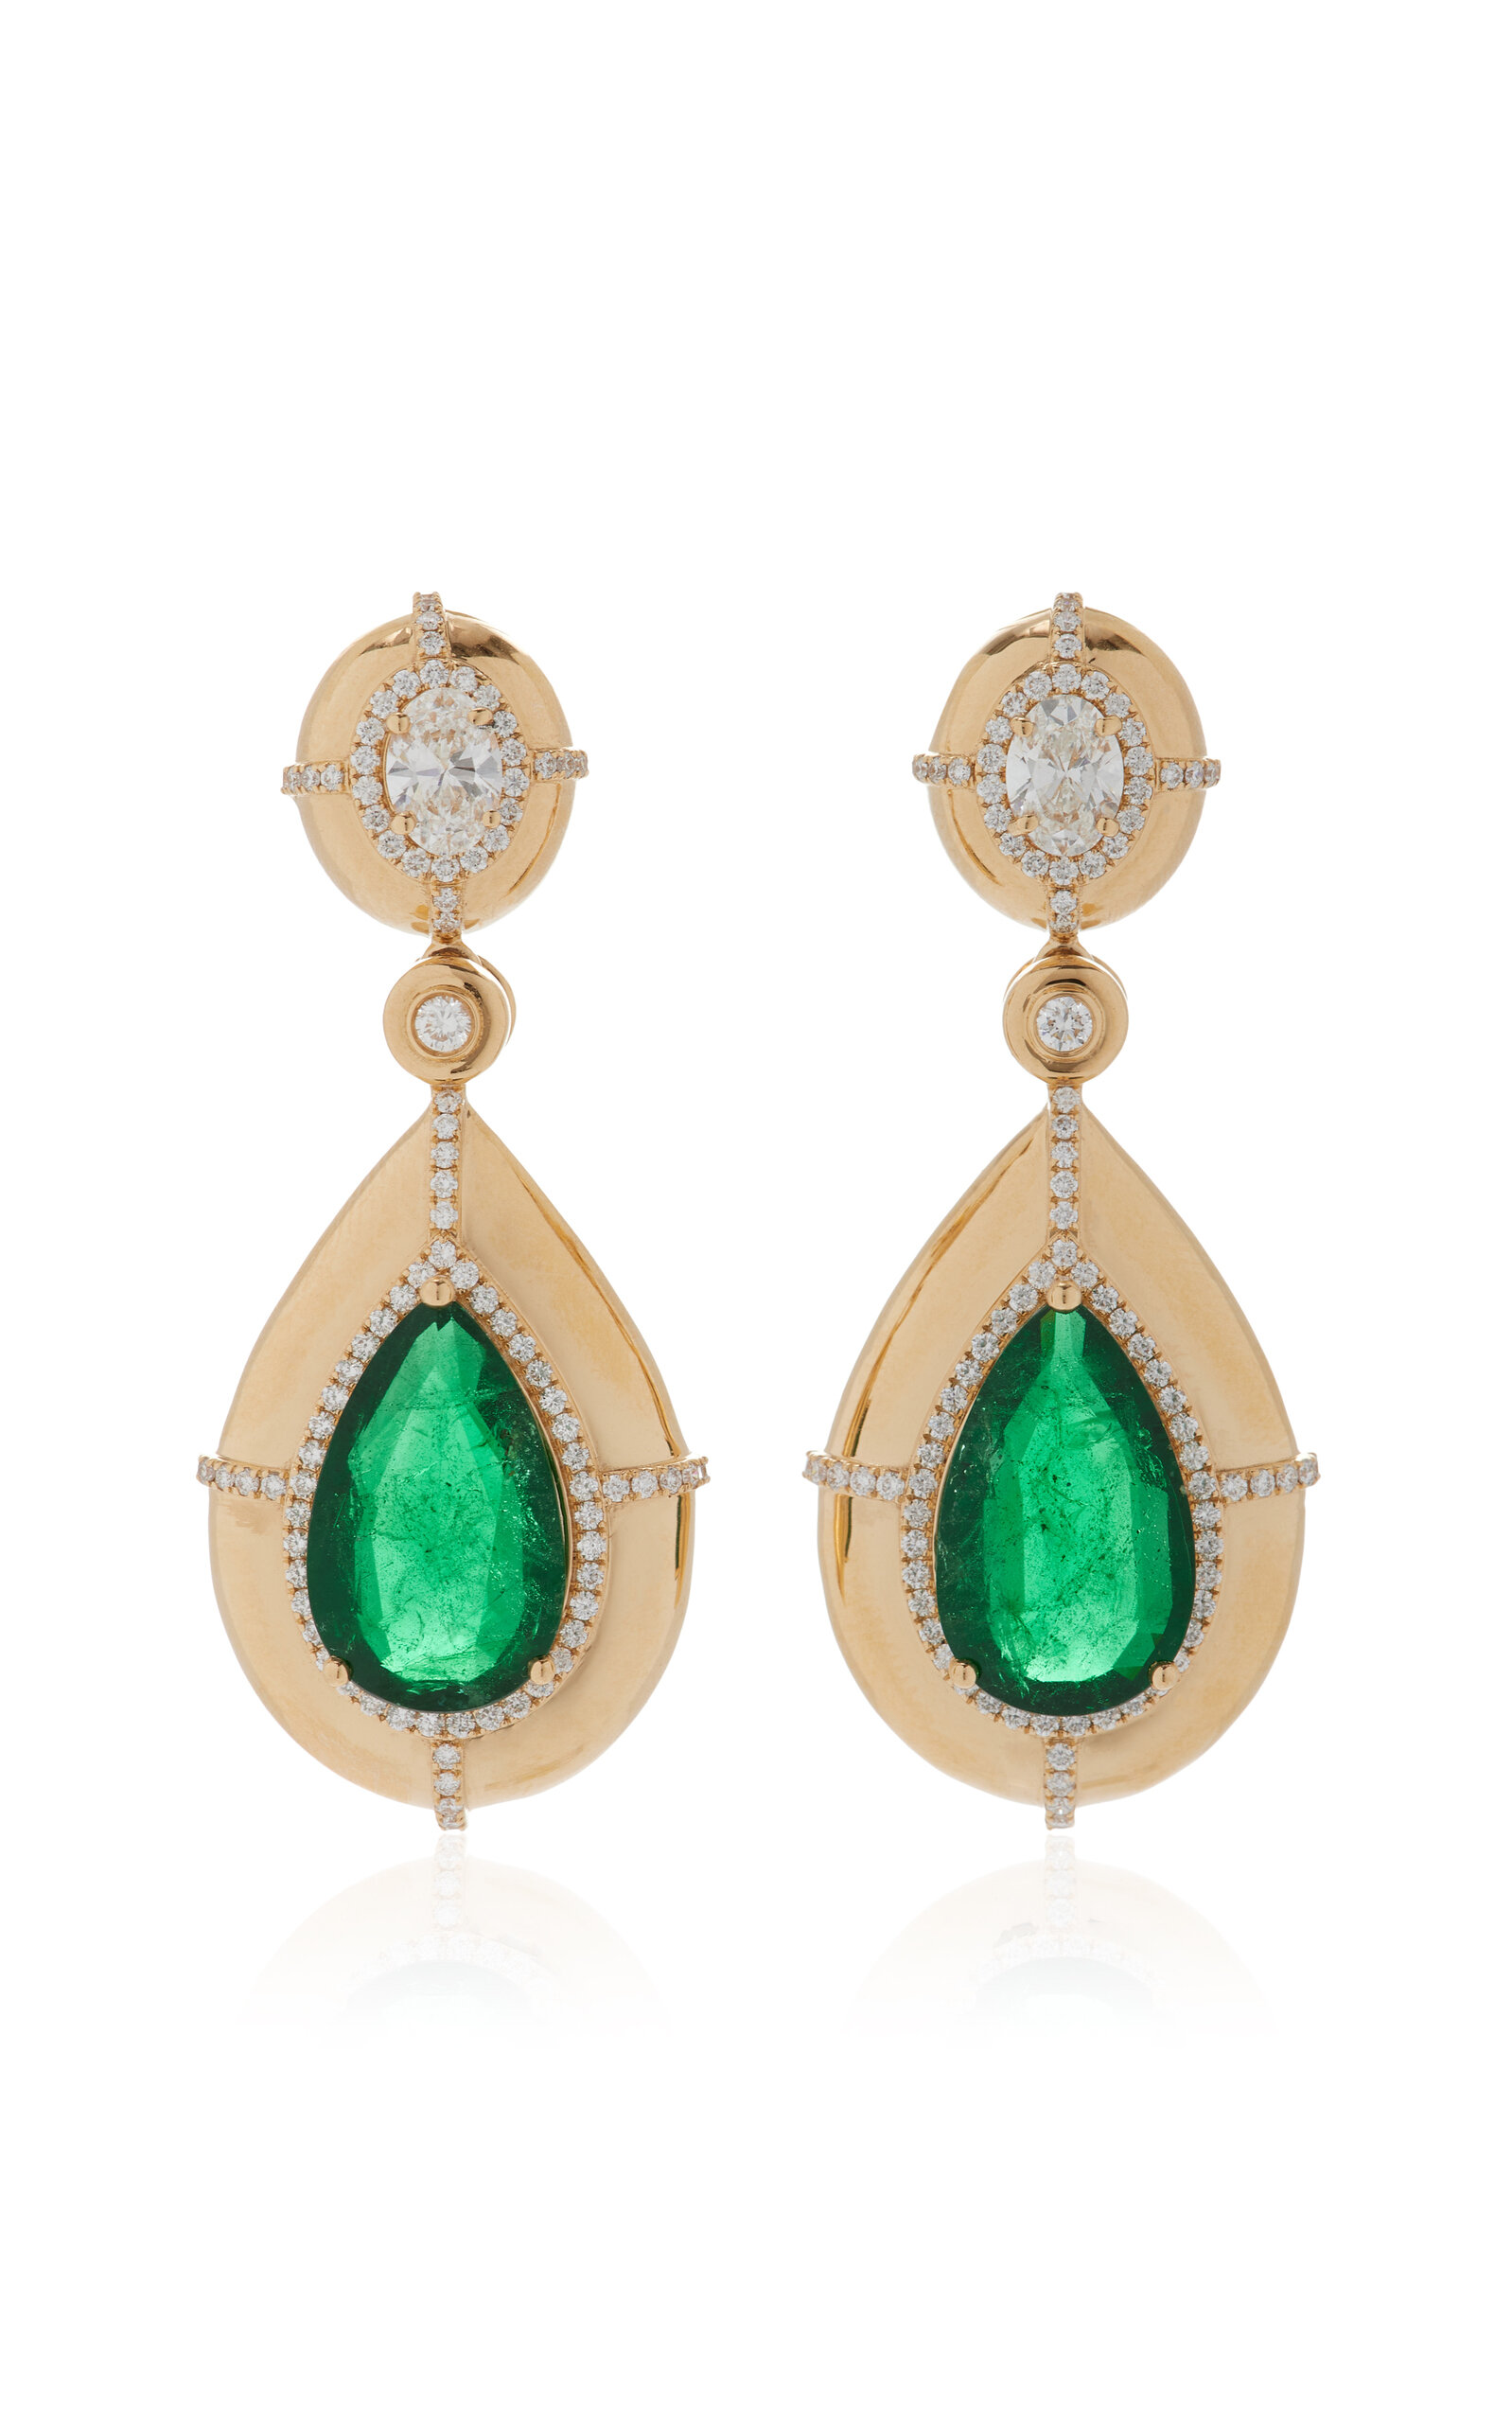 18K Yellow Gold Emerald and Diamond Earrings